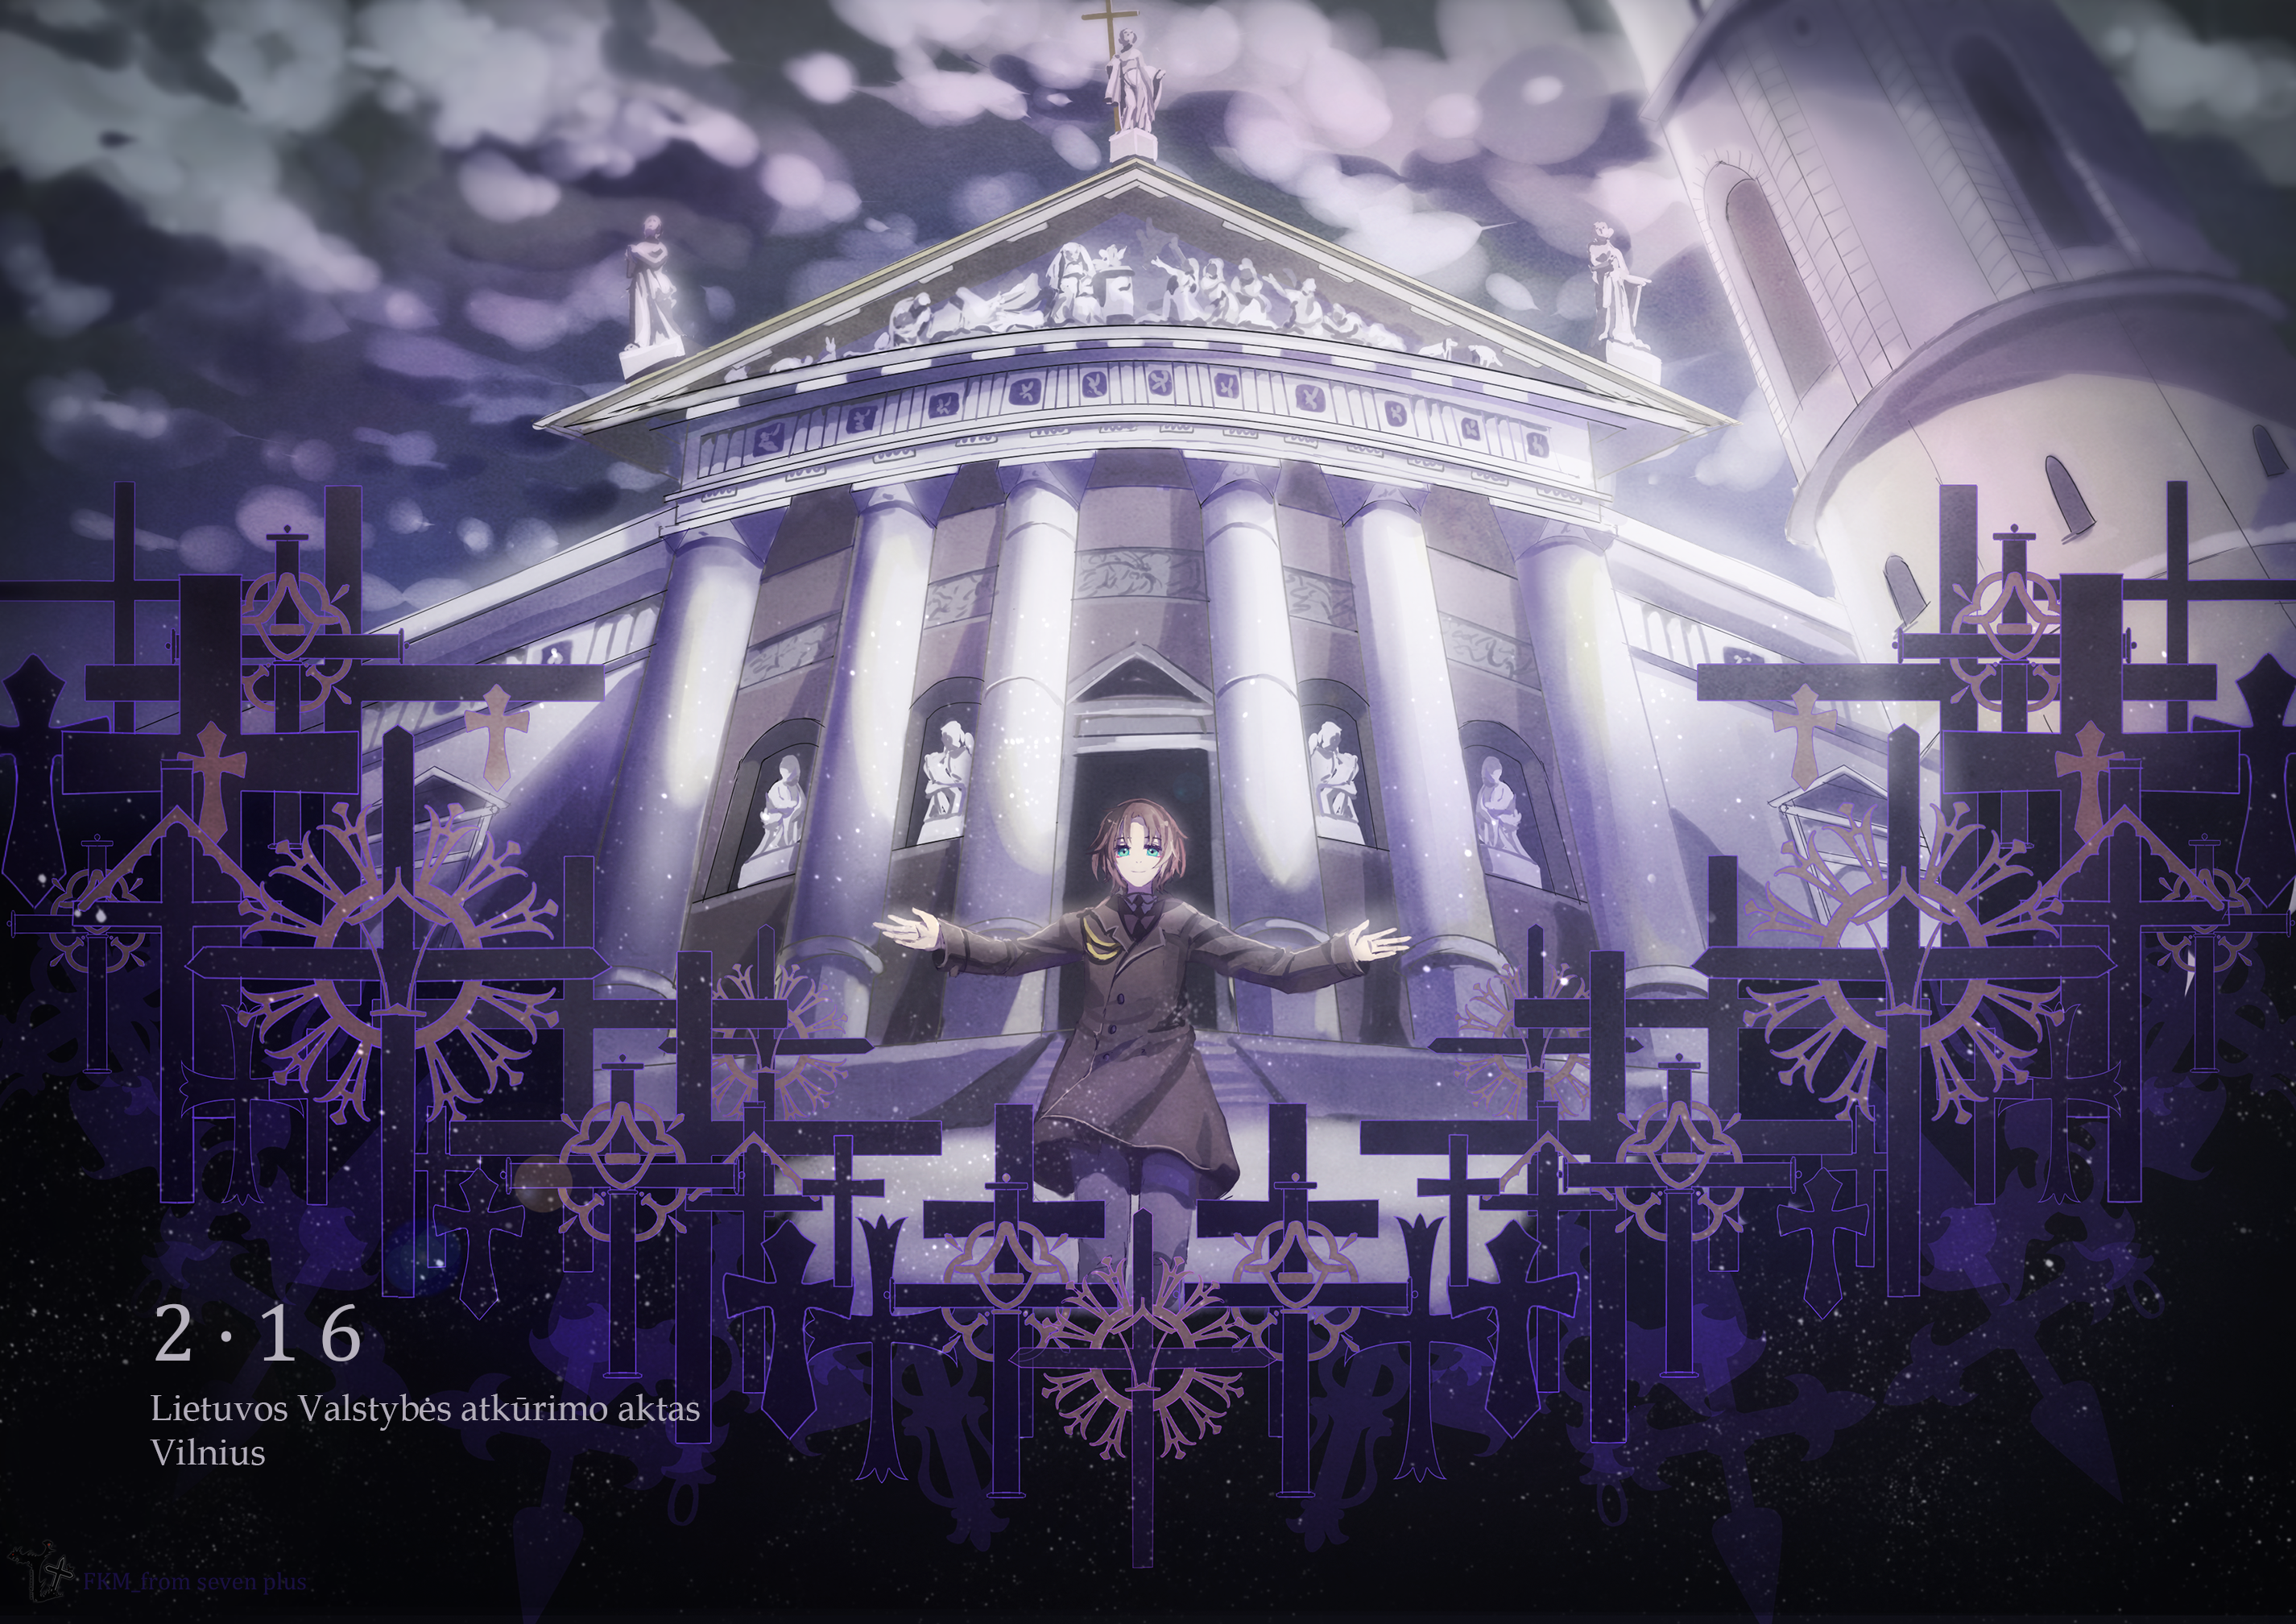 Anime Hetalia: Axis Powers HD Wallpaper | Background Image